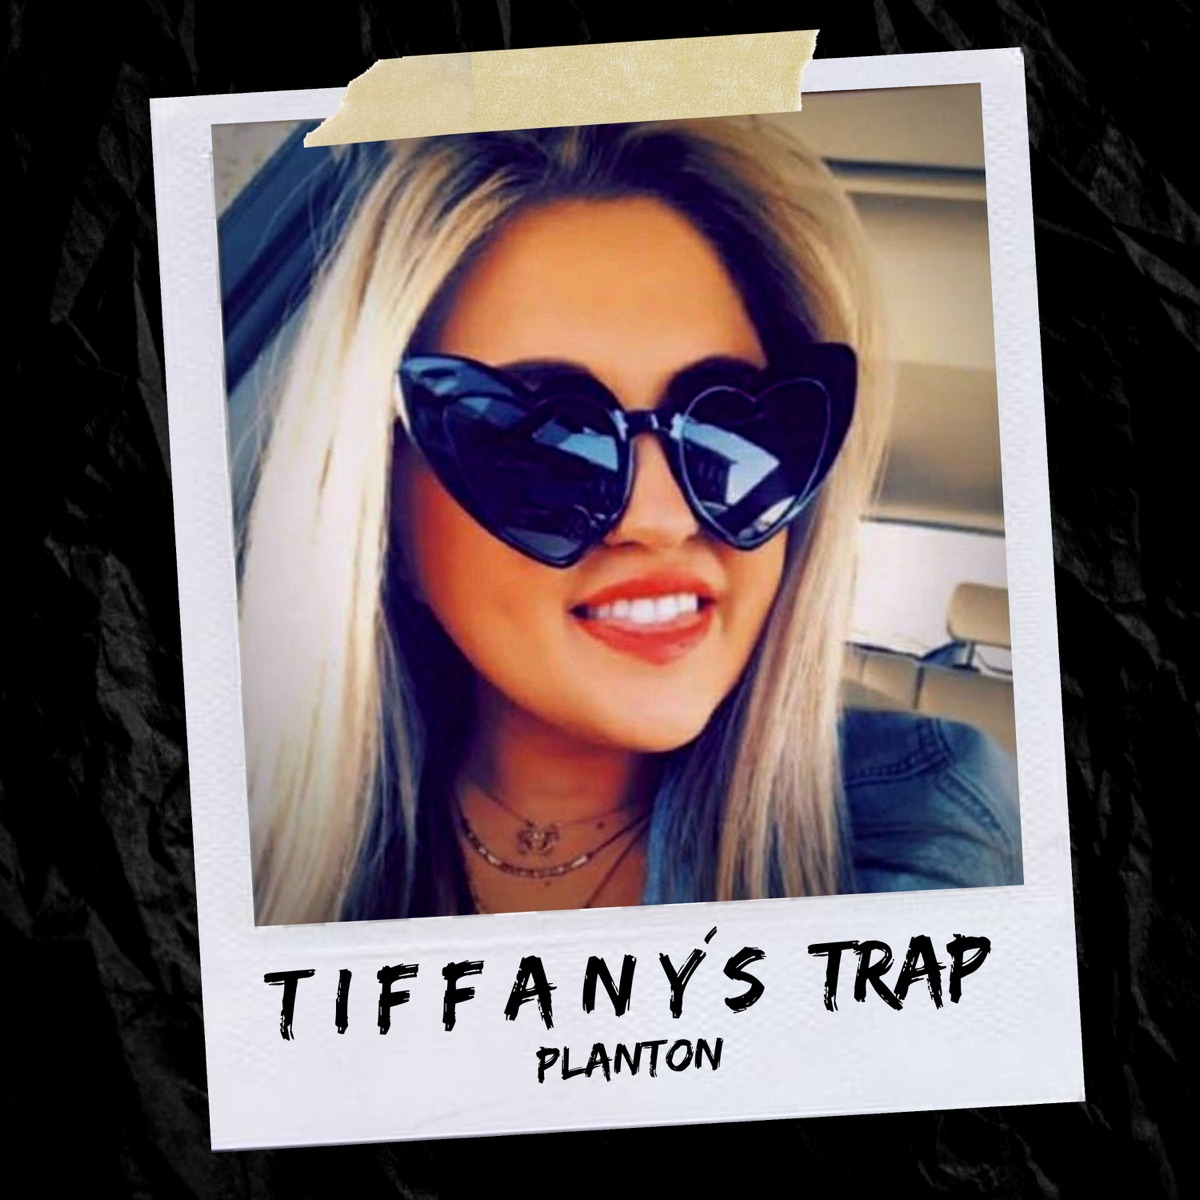 Tiffanys trap